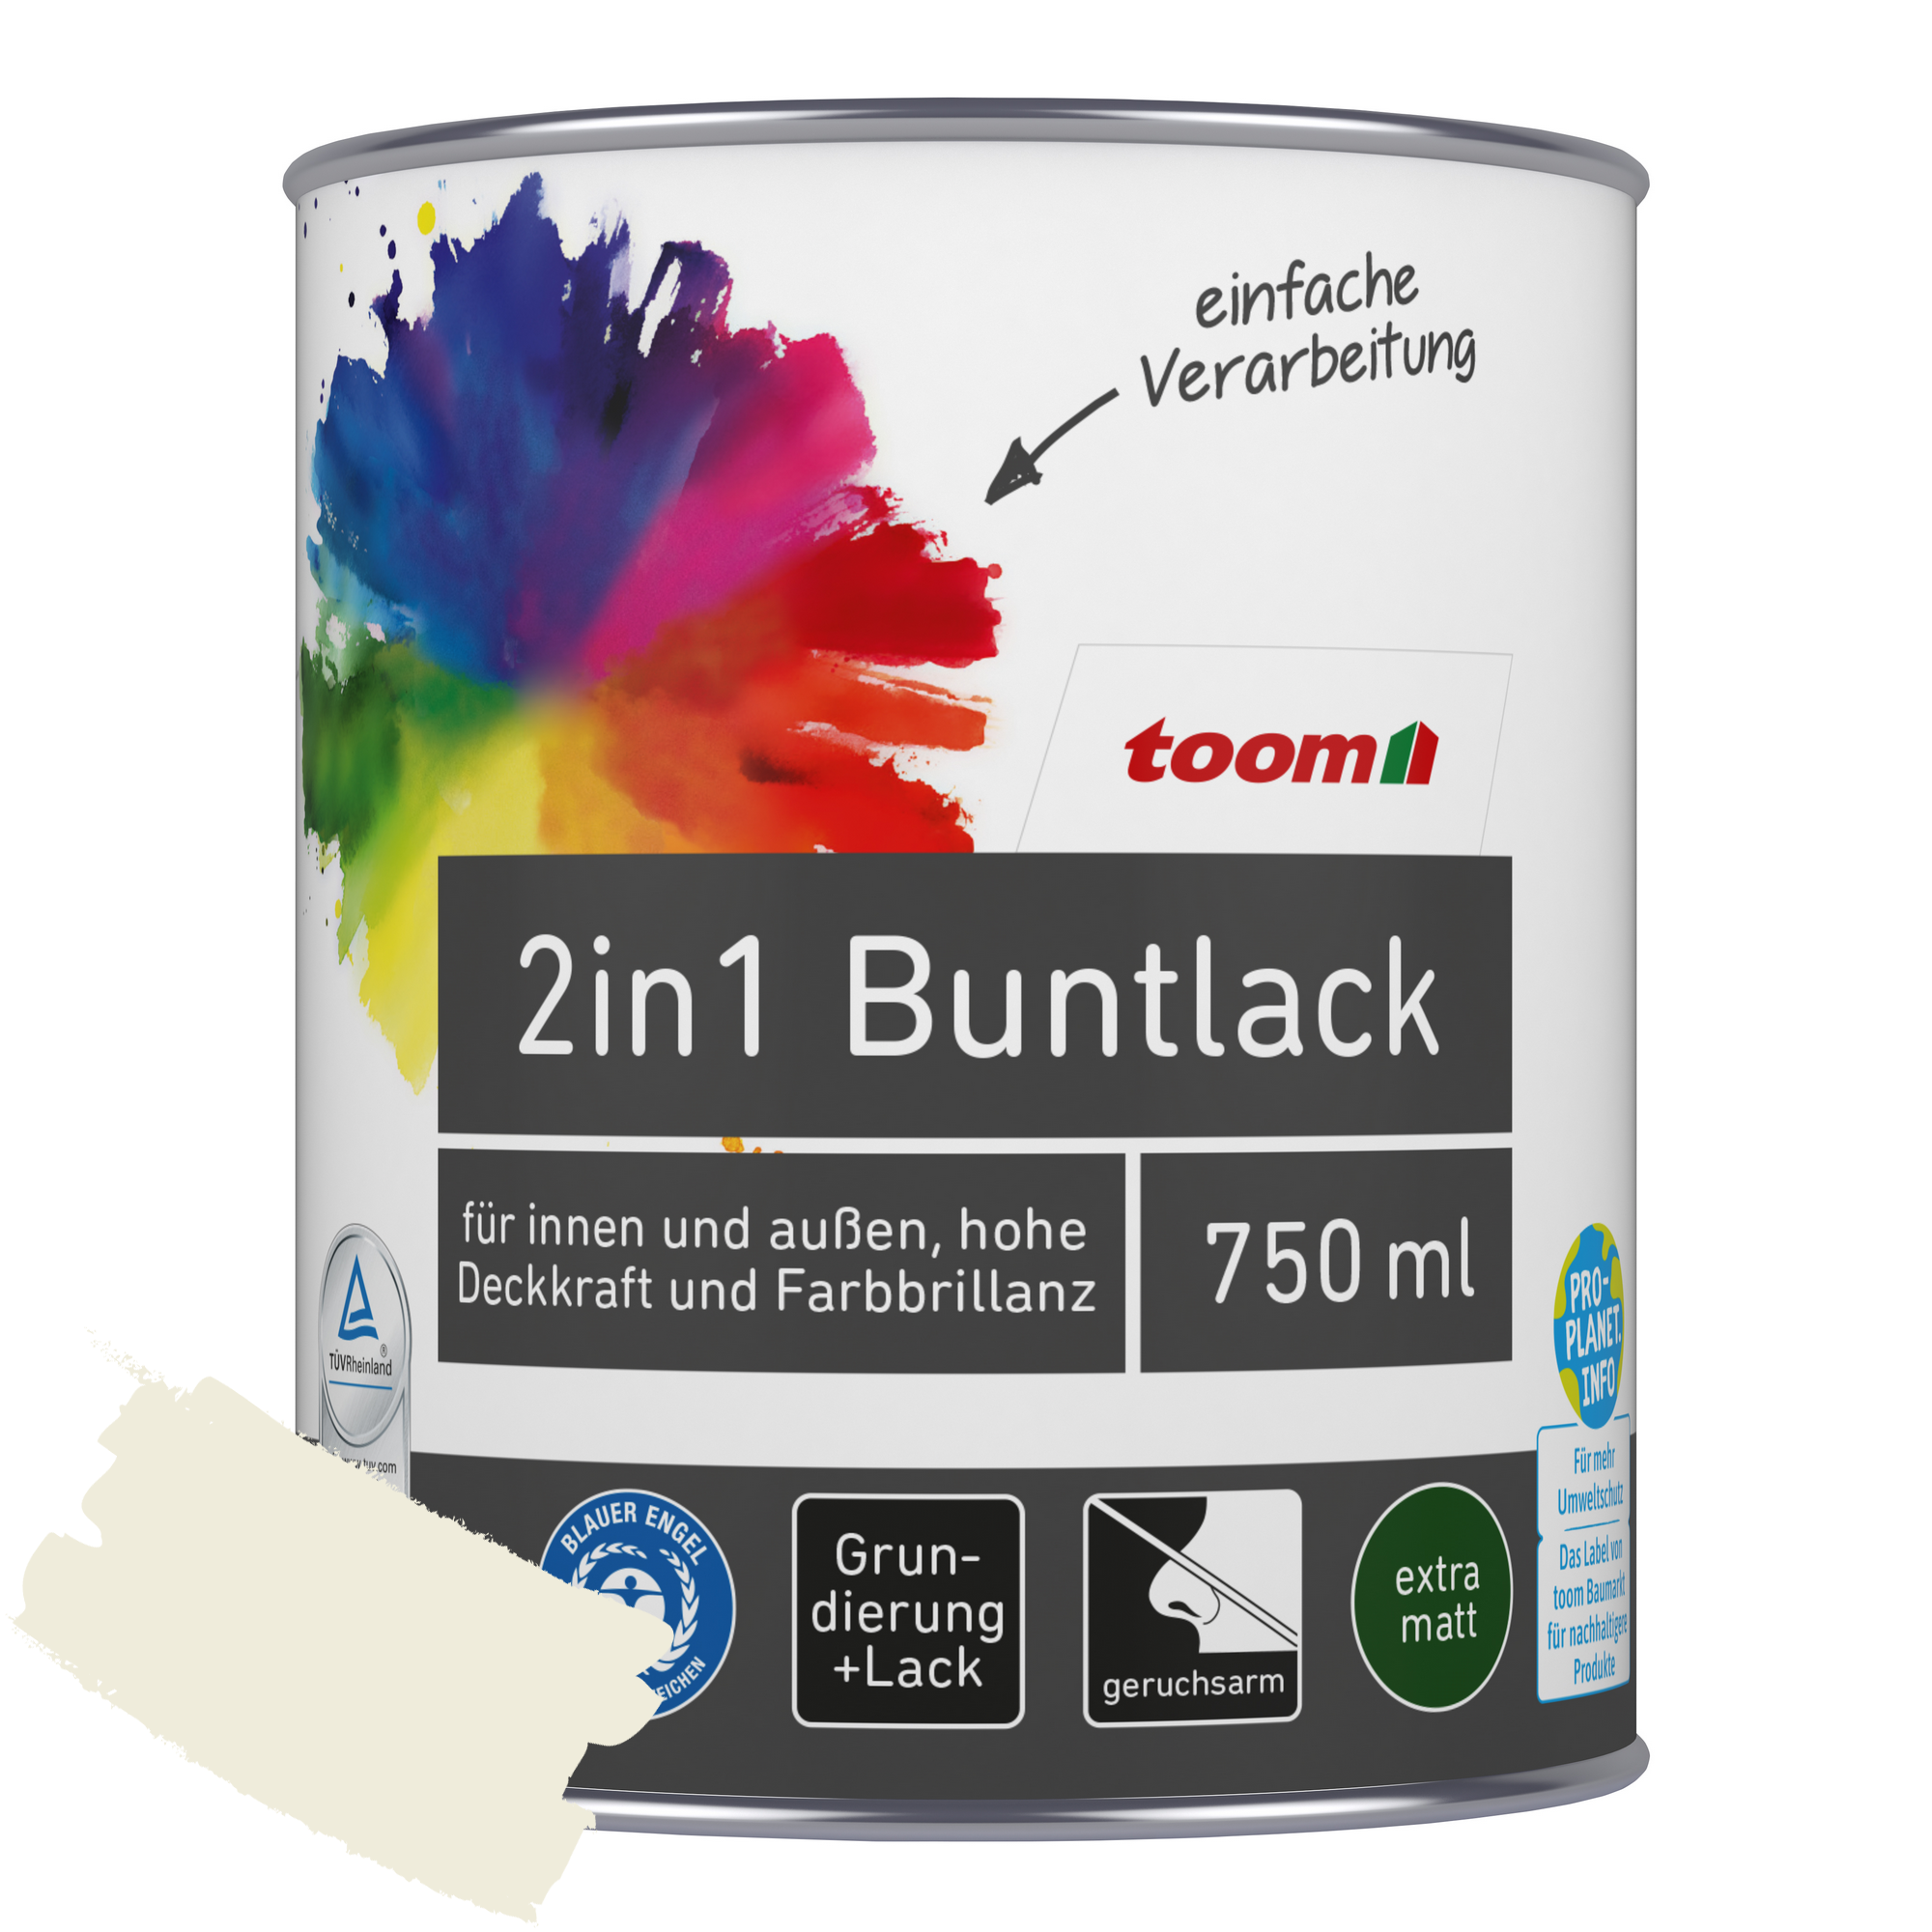 2in1 Buntlack 'Eisblume' weiß matt 750 ml + product picture